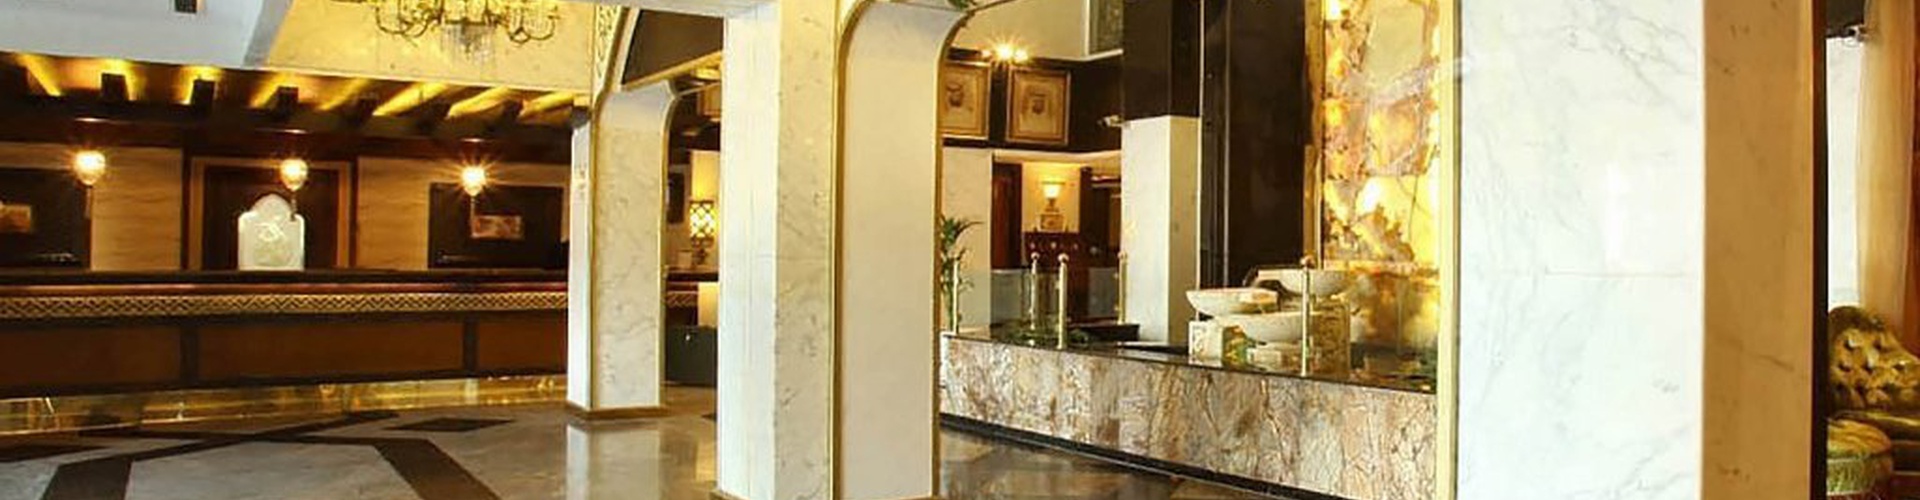 Arabian Courtyard Hotel & Spa rediseño2 - Bur Dubai - 